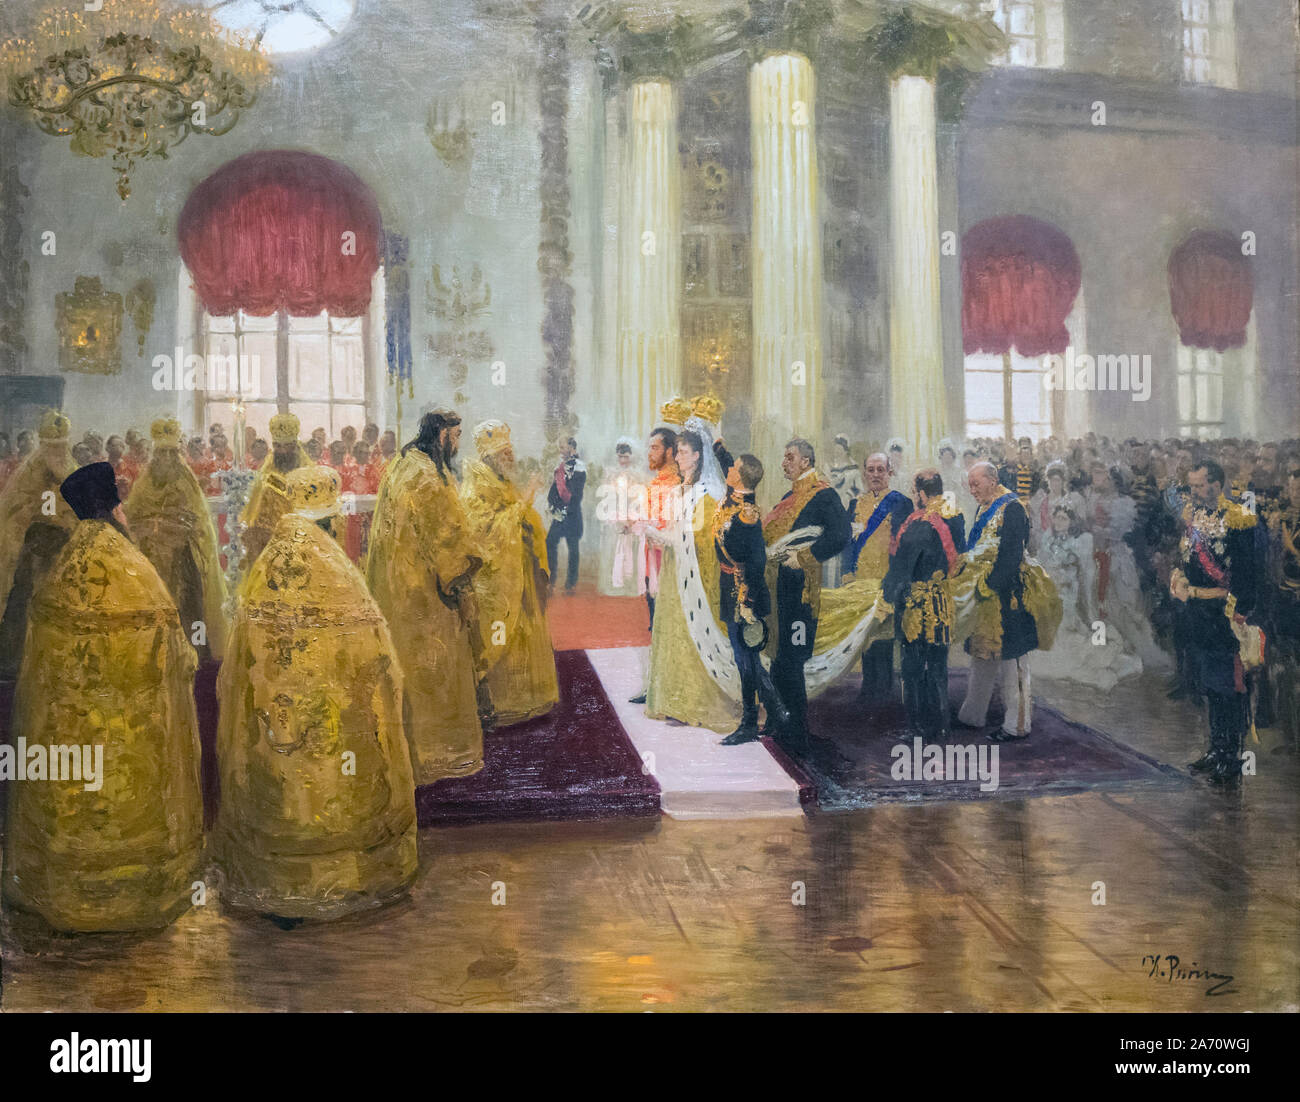 Mariage du tsar Nicolas II et de la grande-duchesse Alexandra Fiodorovna. Après un travail par Ilya Repin. Le Tsar Nicolas II, 1868 - 1918. La grande-duchesse Alexandr Banque D'Images